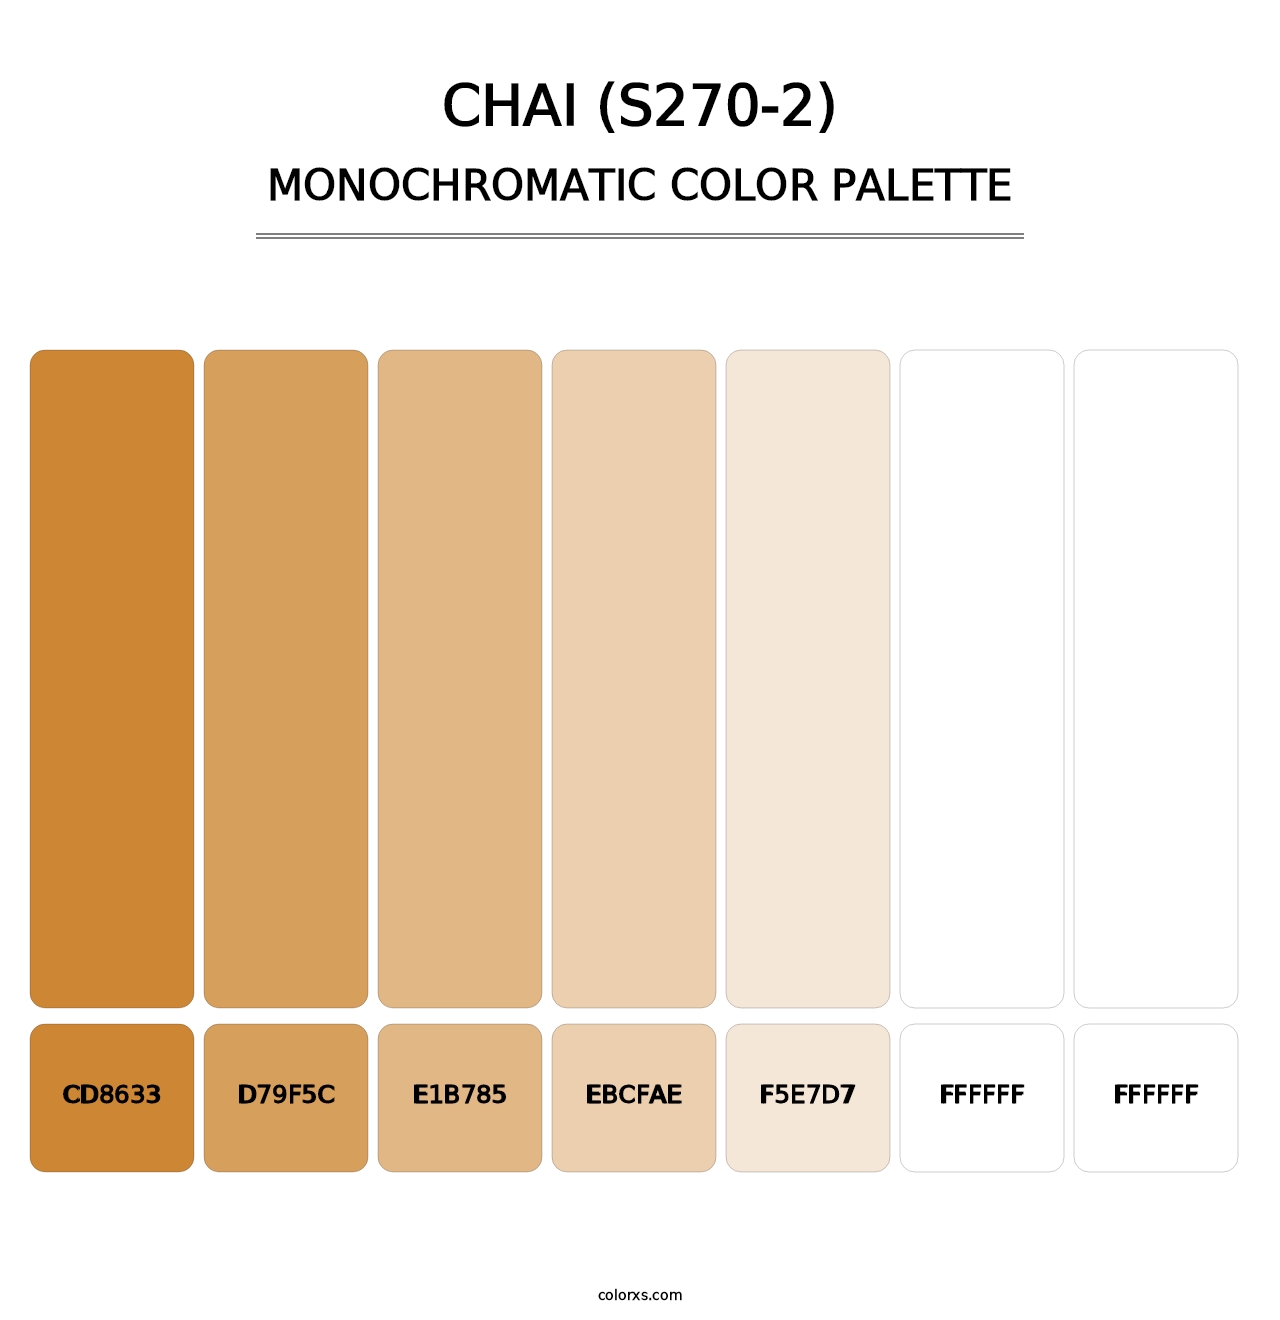 Chai (S270-2) - Monochromatic Color Palette